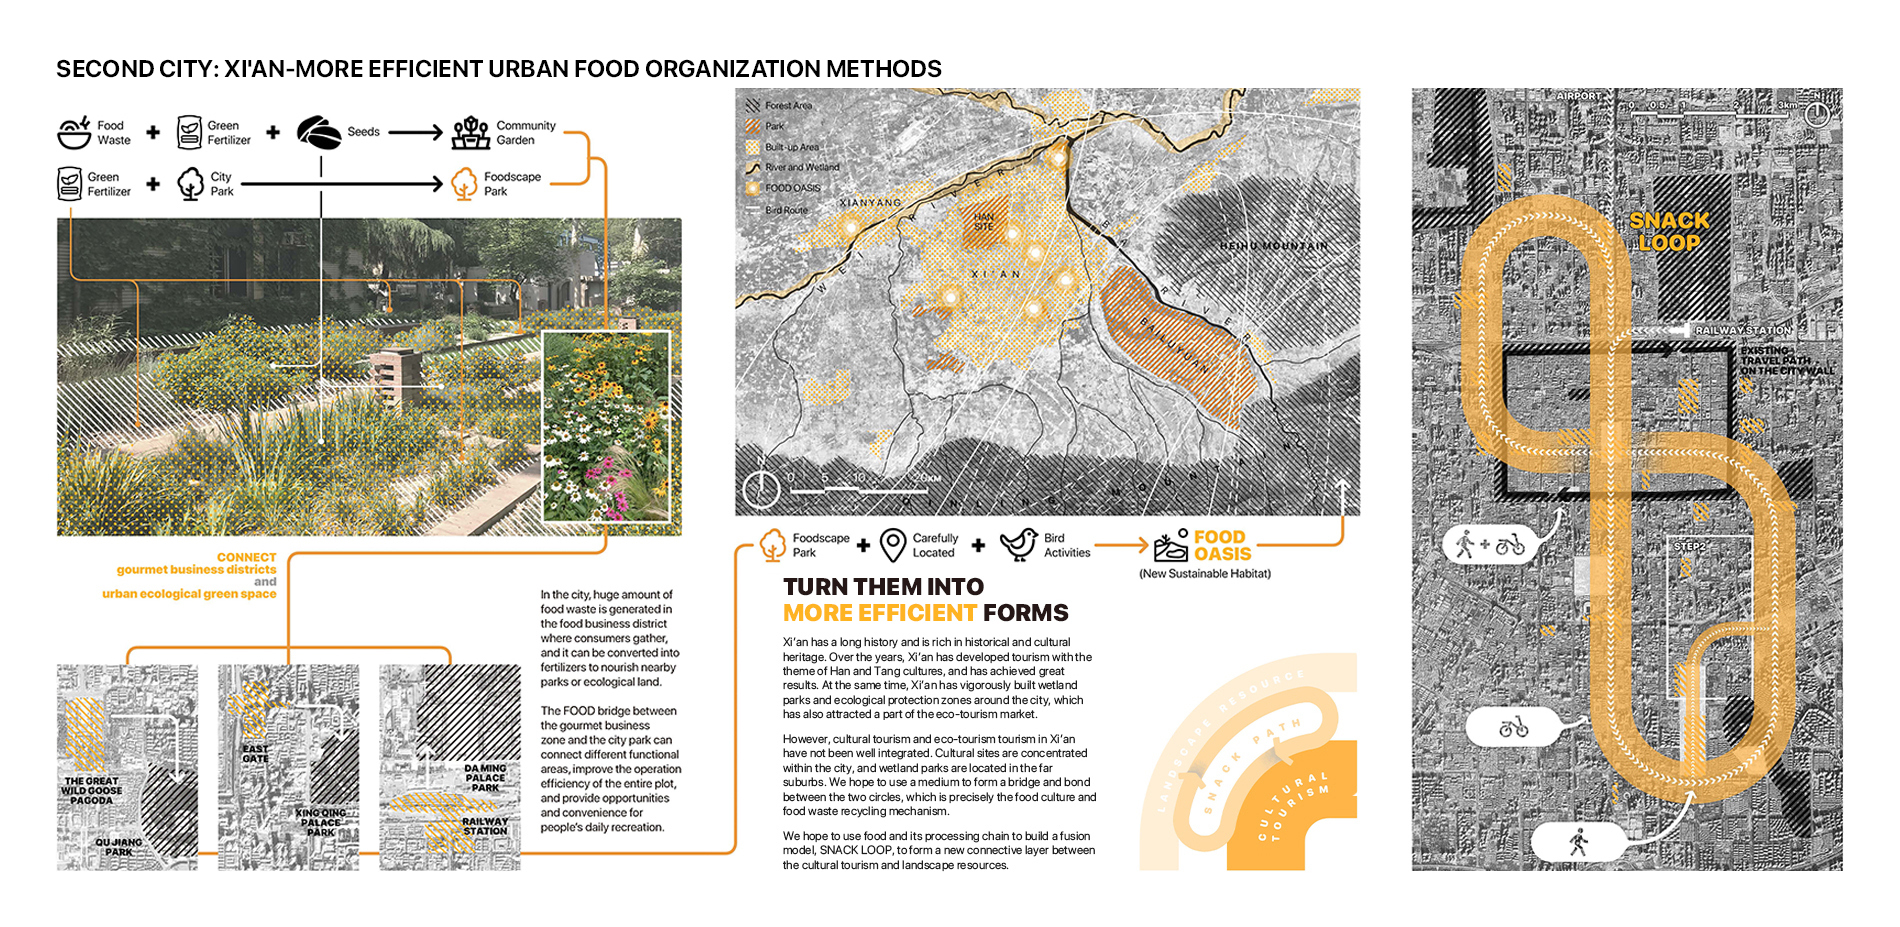 More Efficient Urban Food Organization Methods (Xi'an)